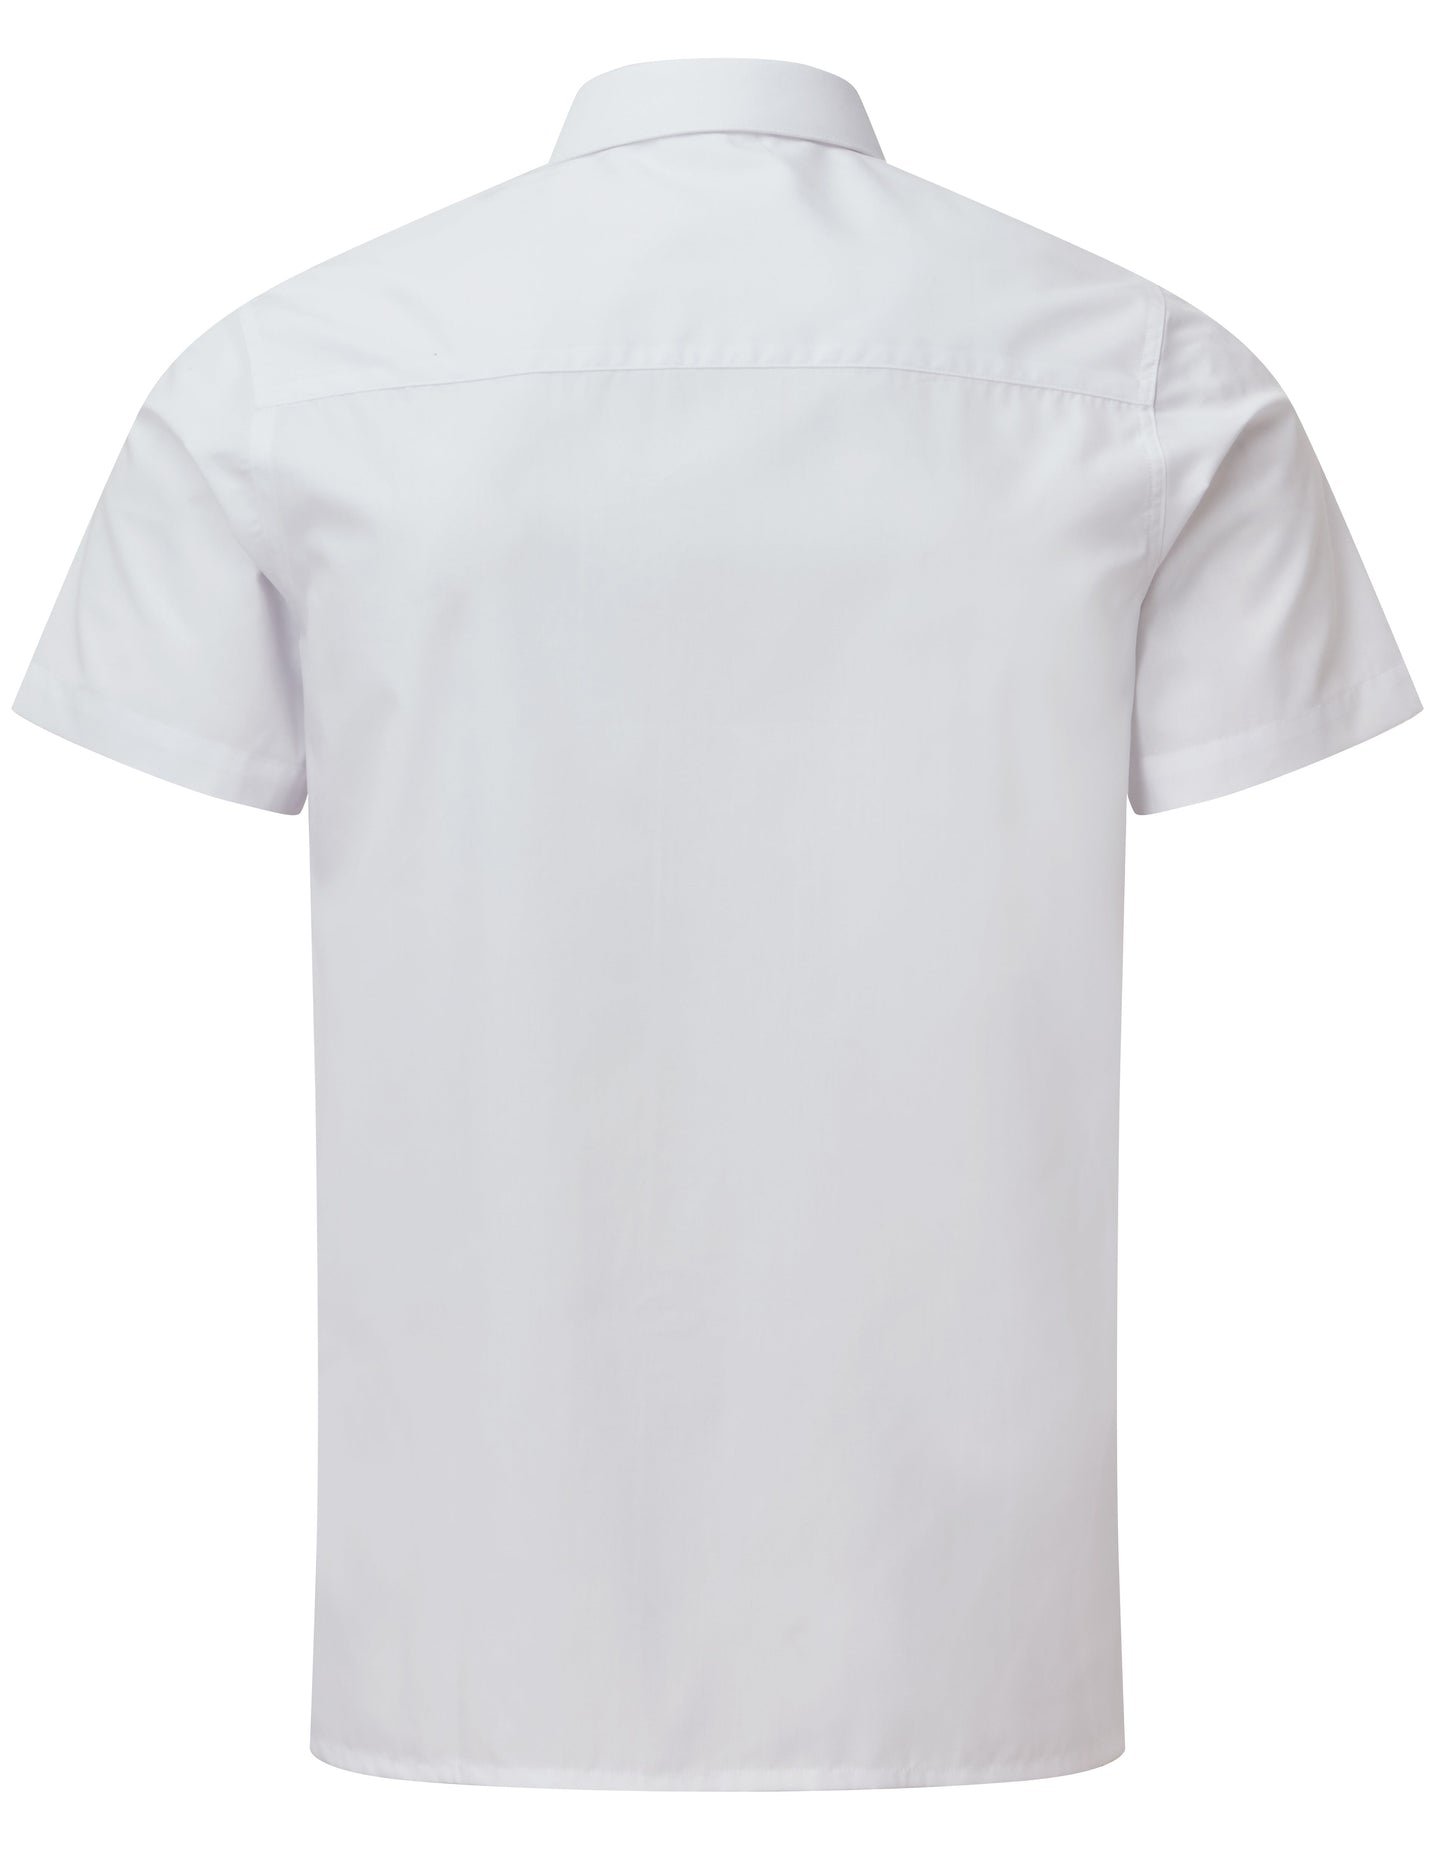 White - Boys' Short Sleeve Shirt (Twin Pack)